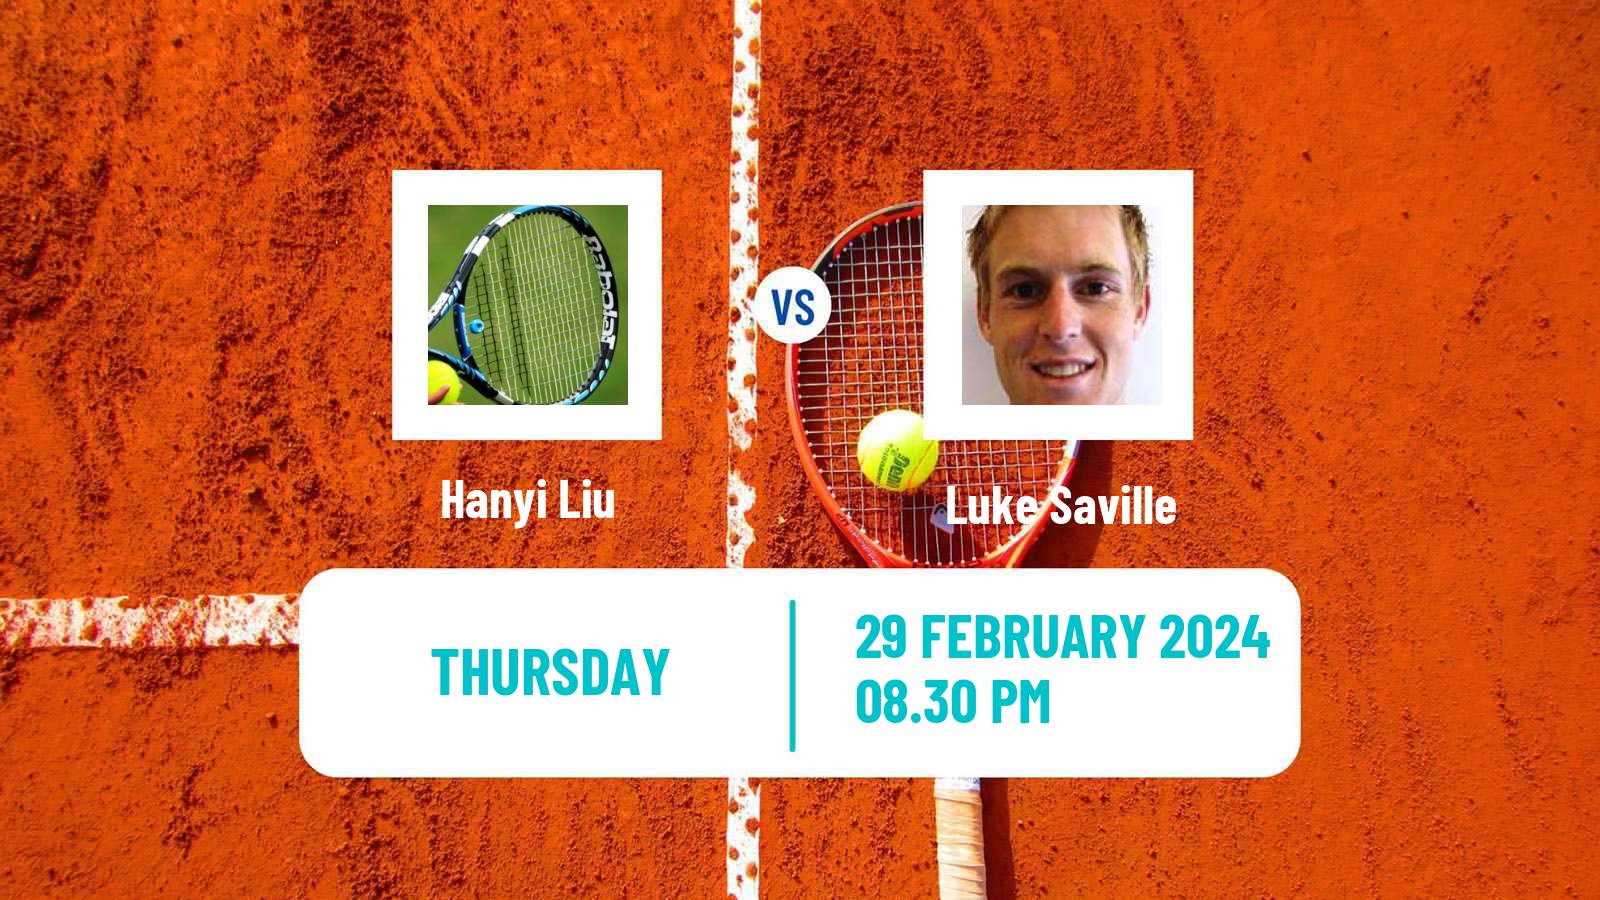 Tennis ITF M25 Traralgon 2 Men Hanyi Liu - Luke Saville